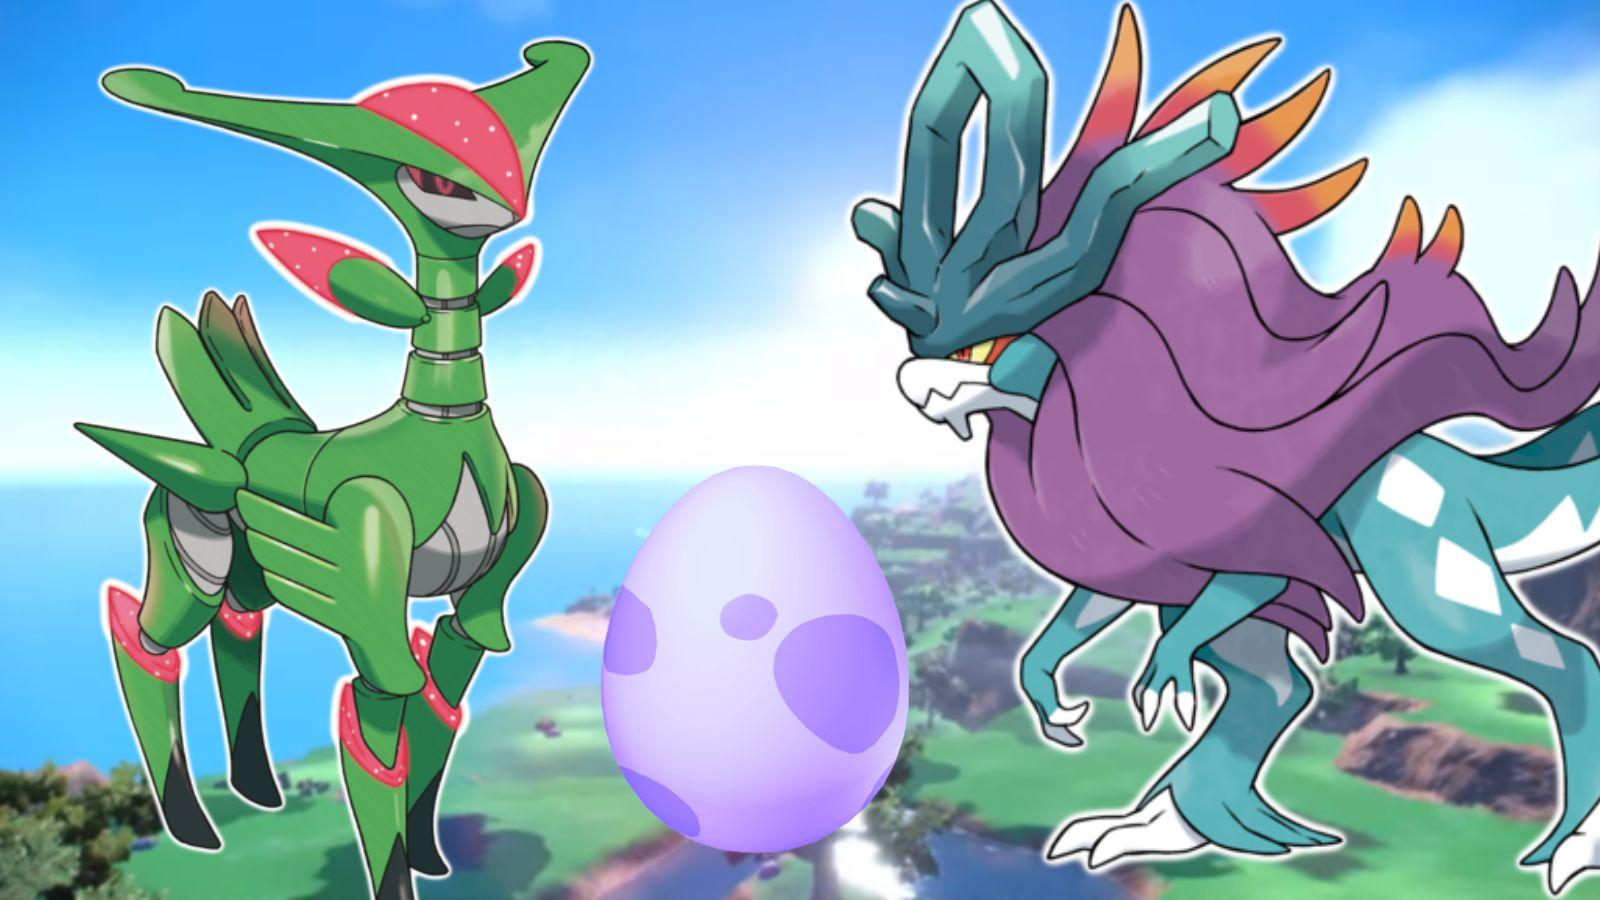 Pokémon GO can now connect to Pokémon Scarlet and Pokémon Violet